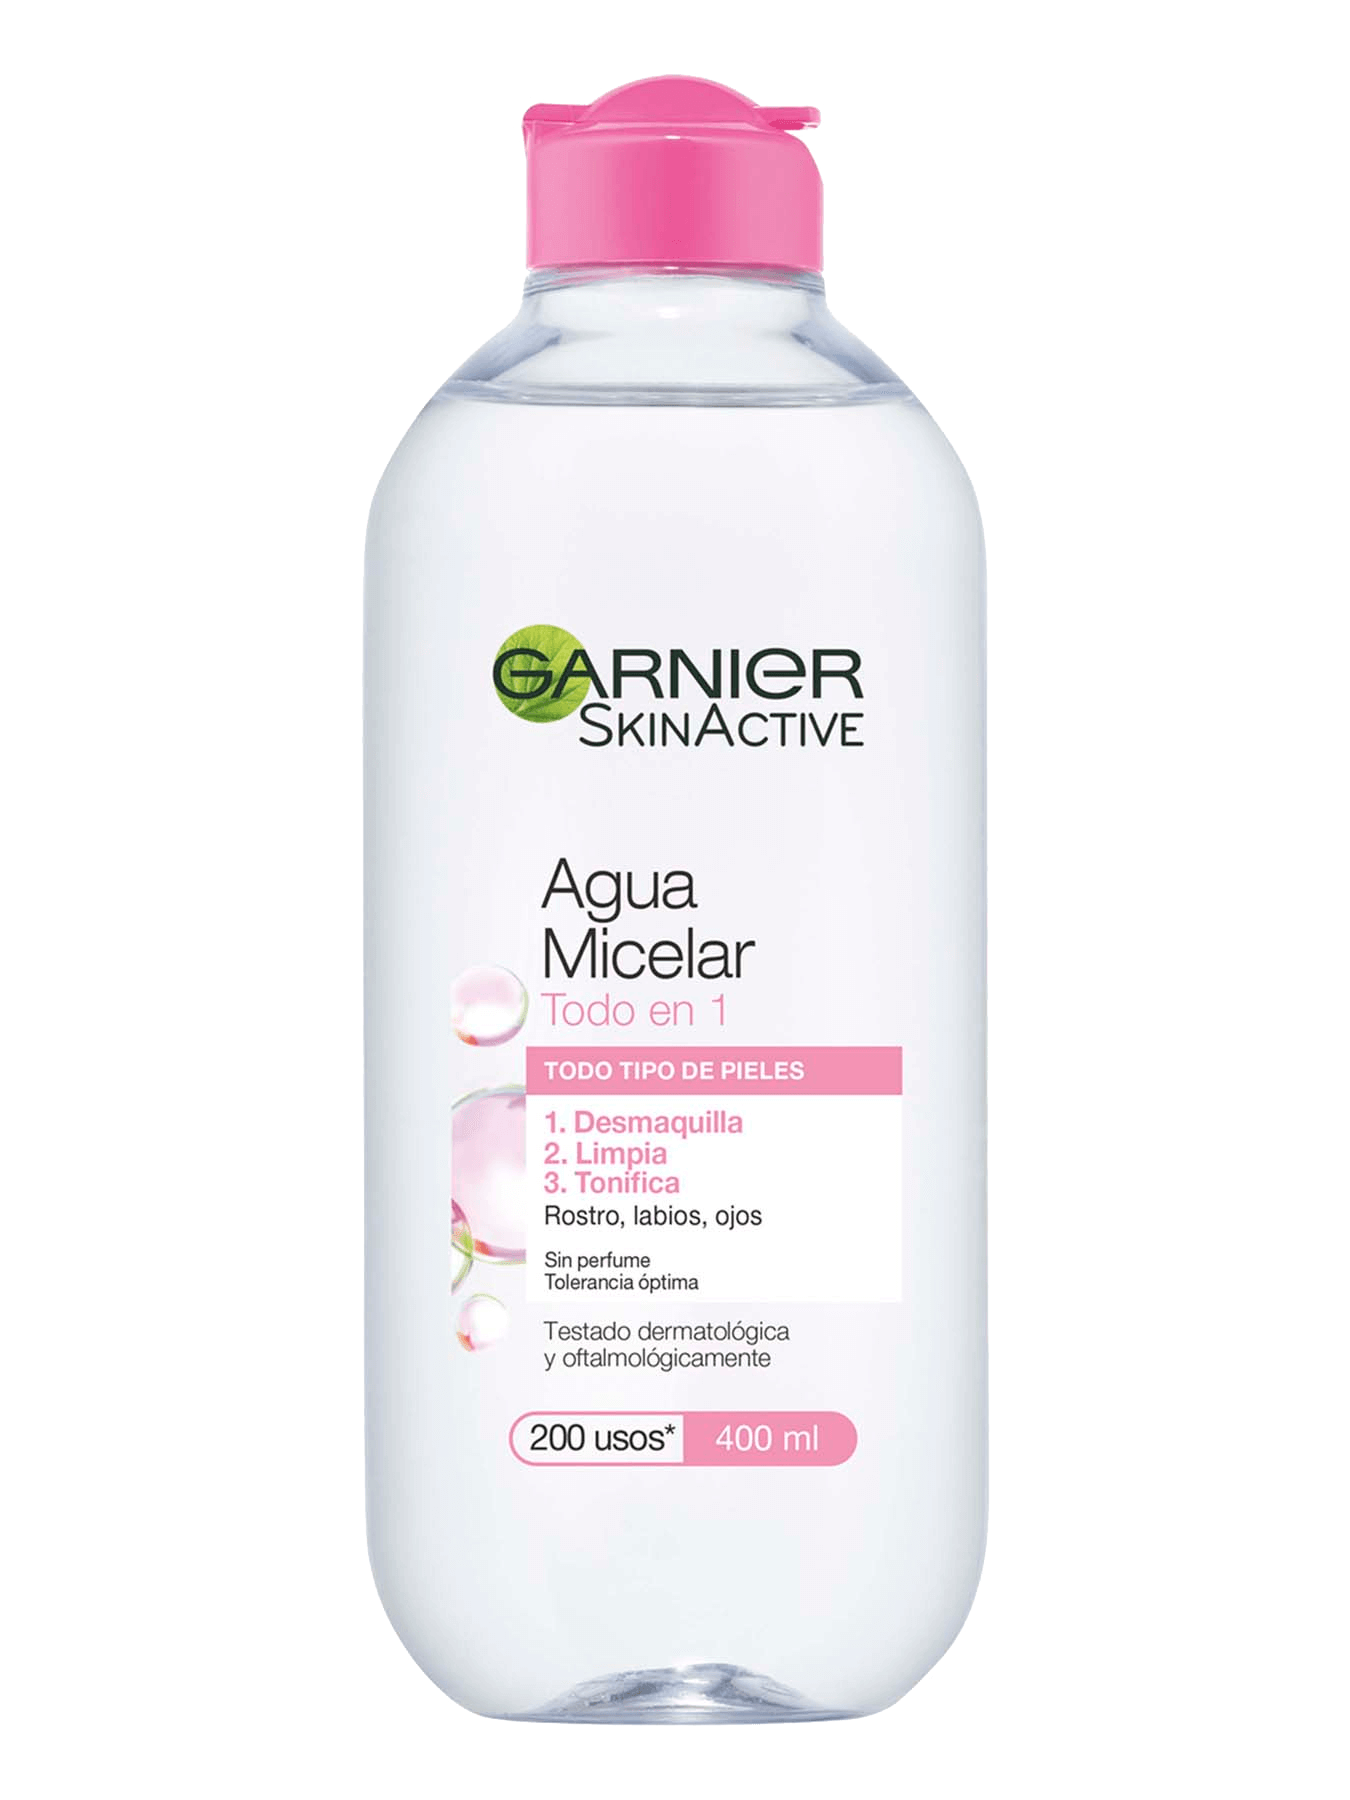 Garnier Agua Micelar Limpiadora Con Ácido Hialurónico + Aloe 700 ml